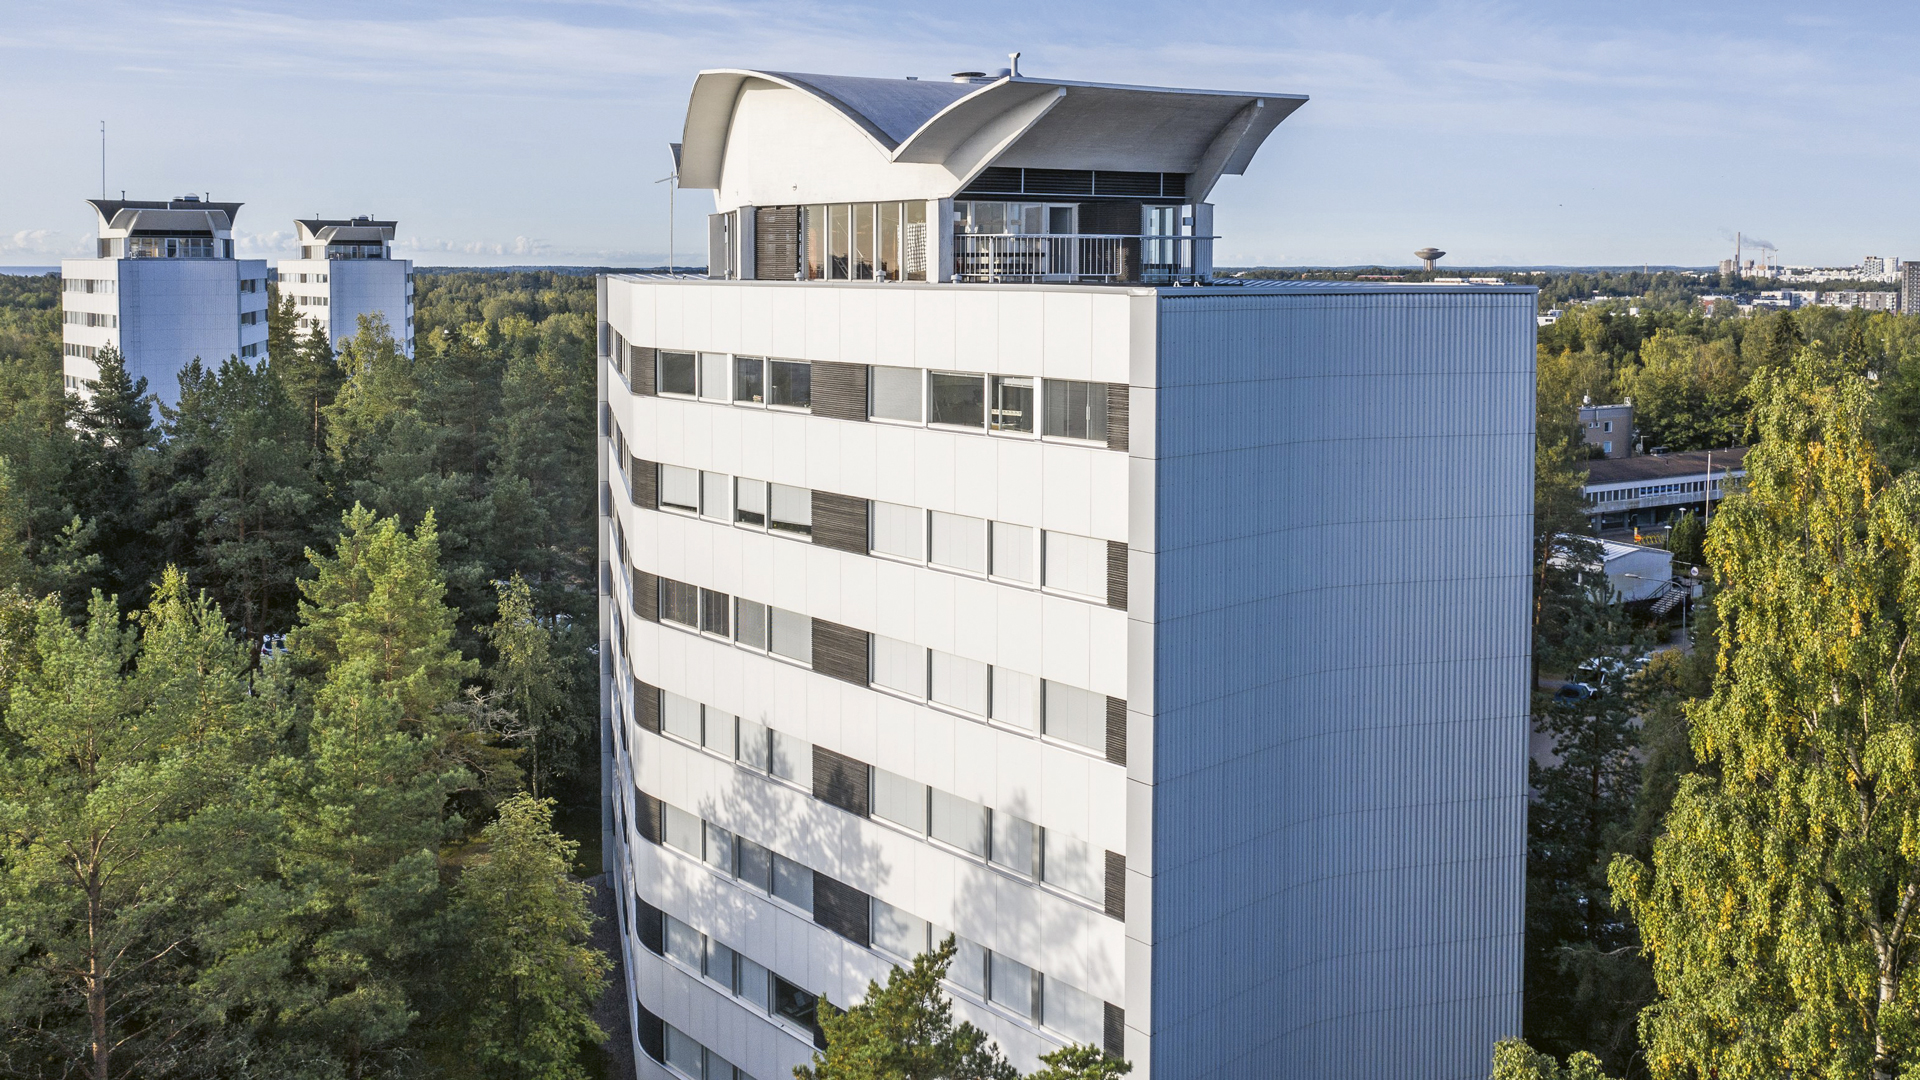 As Oy Säästökontu implemented complex facade renovation successfully